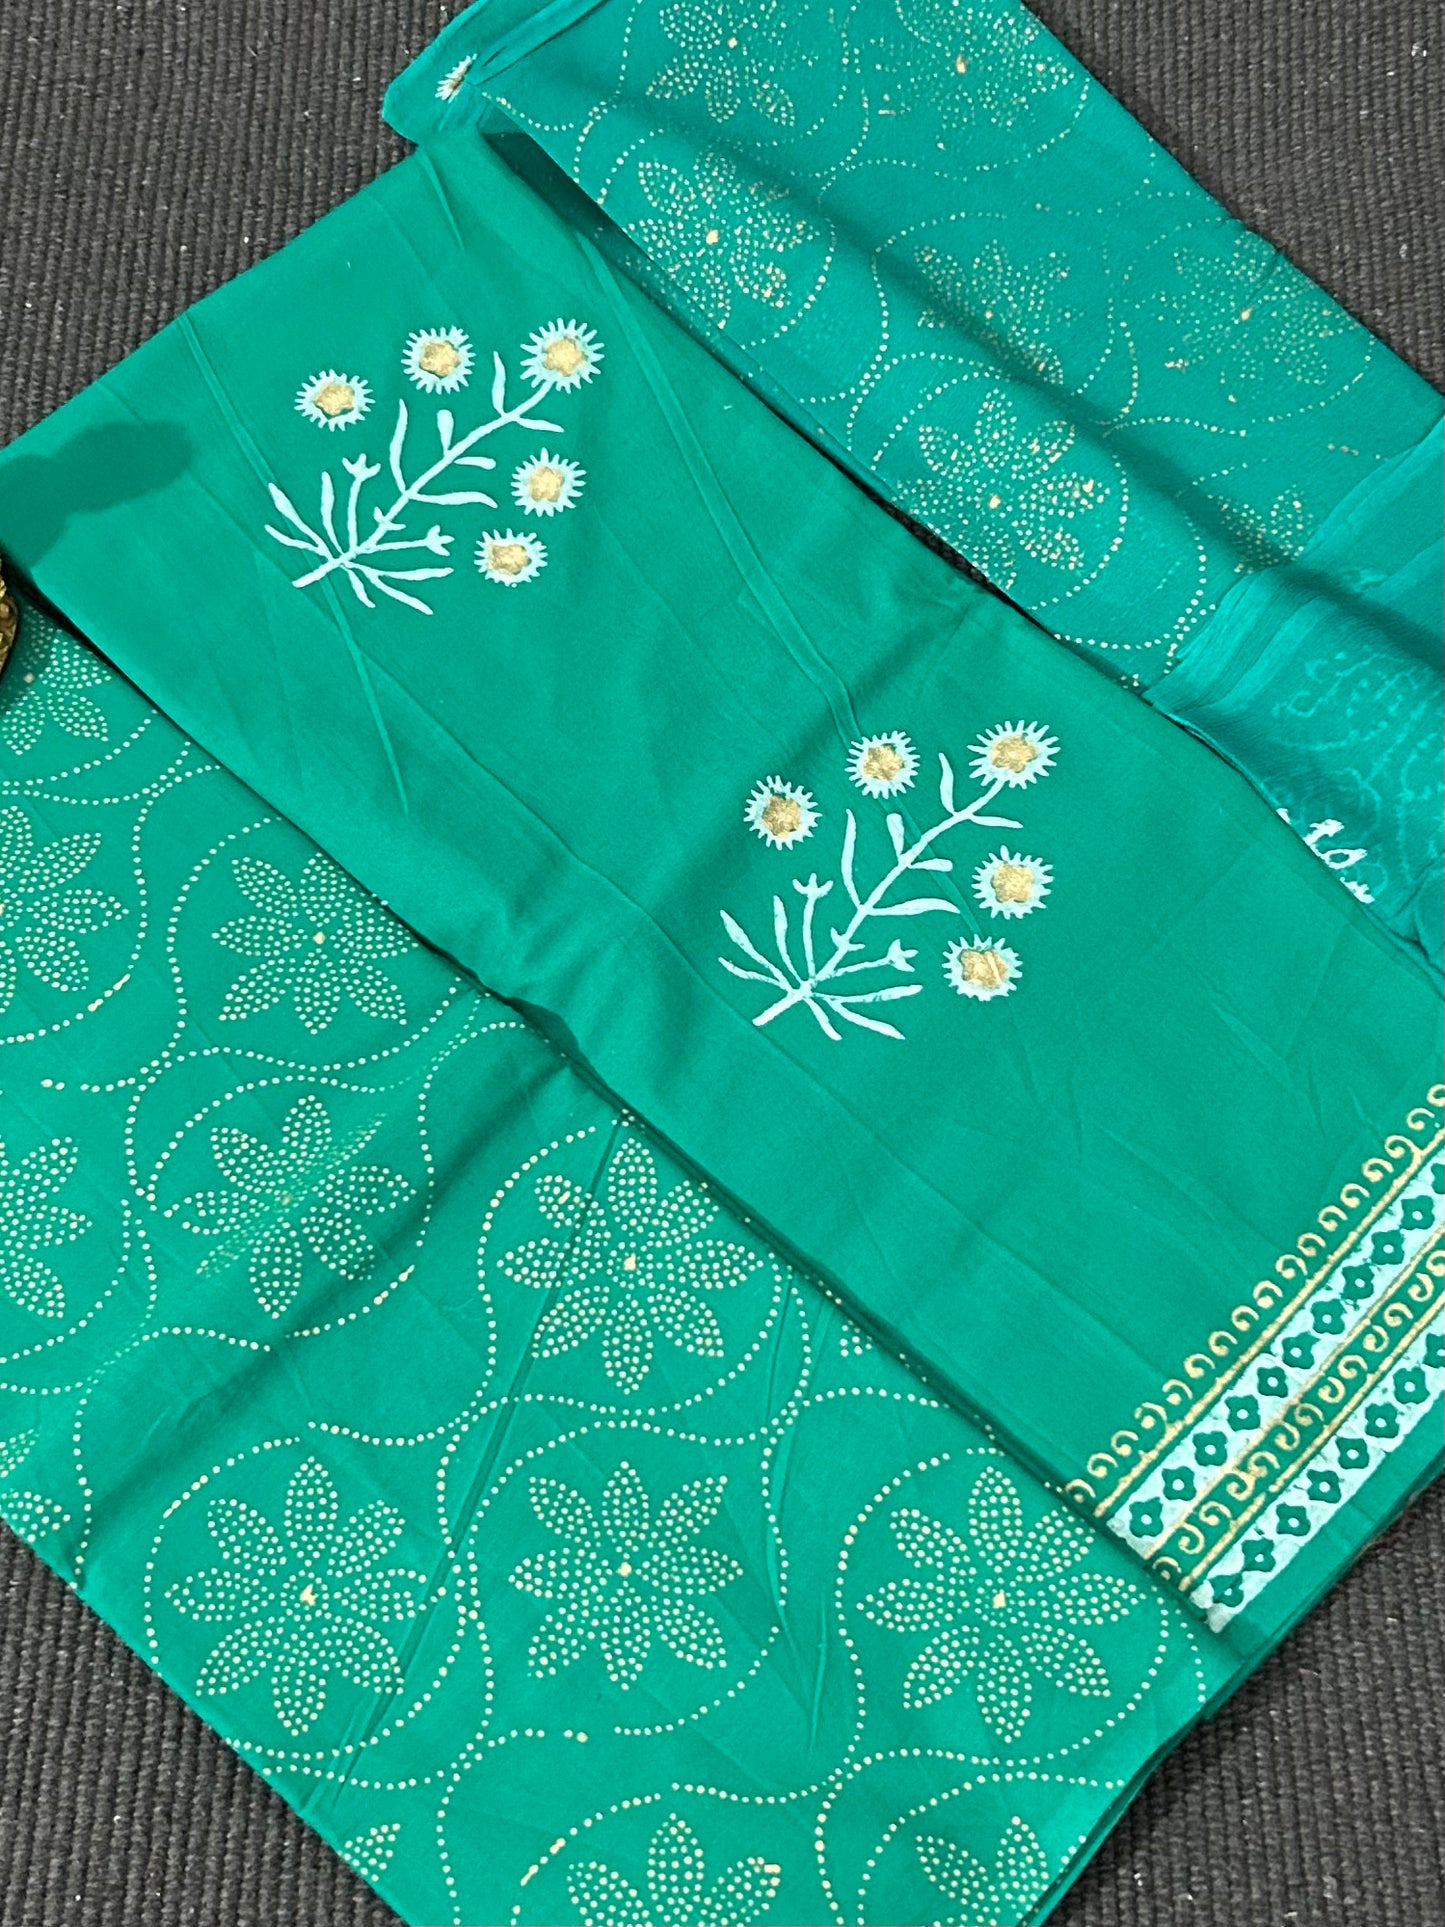 Cotton block printed Dress Material with Chiffon Dupatta